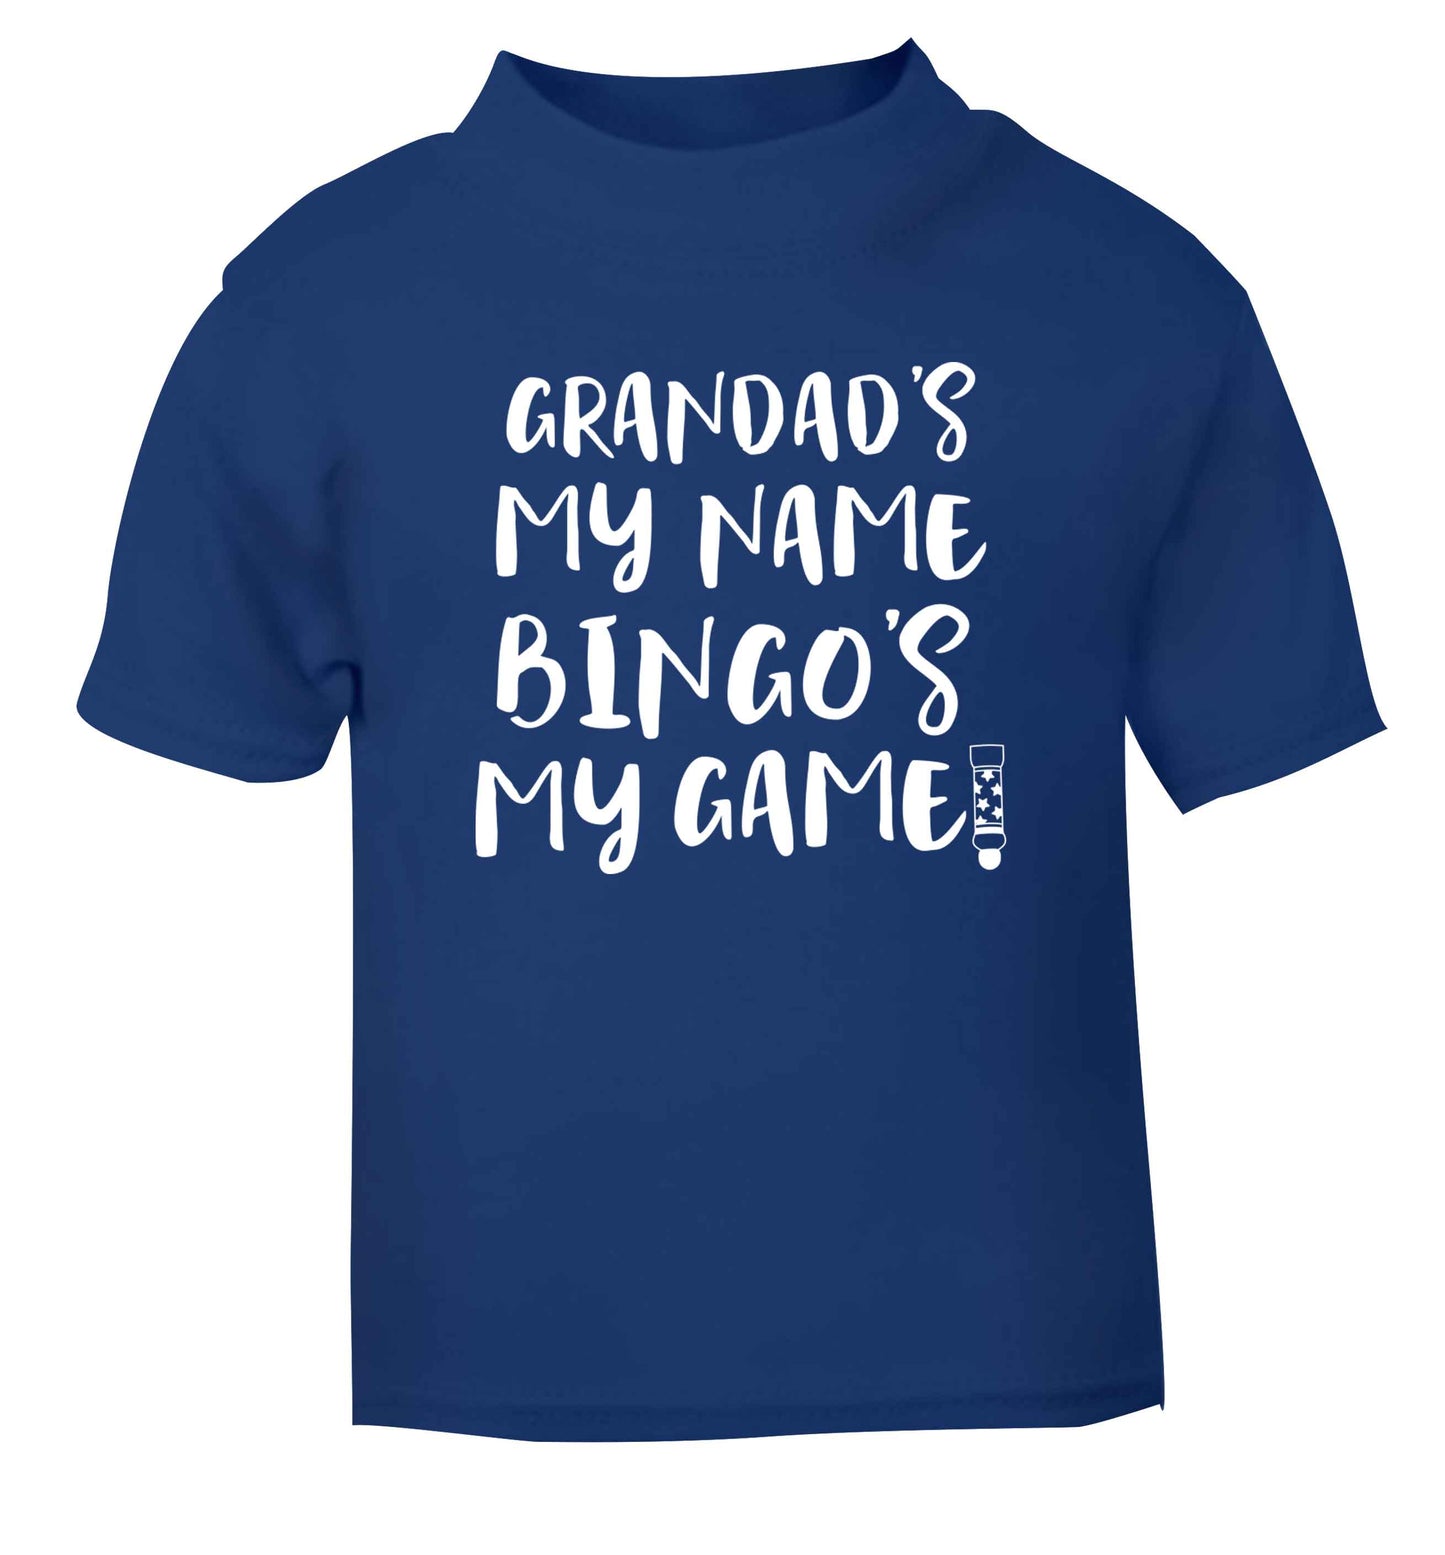 Grandad's my name bingo's my game! blue Baby Toddler Tshirt 2 Years